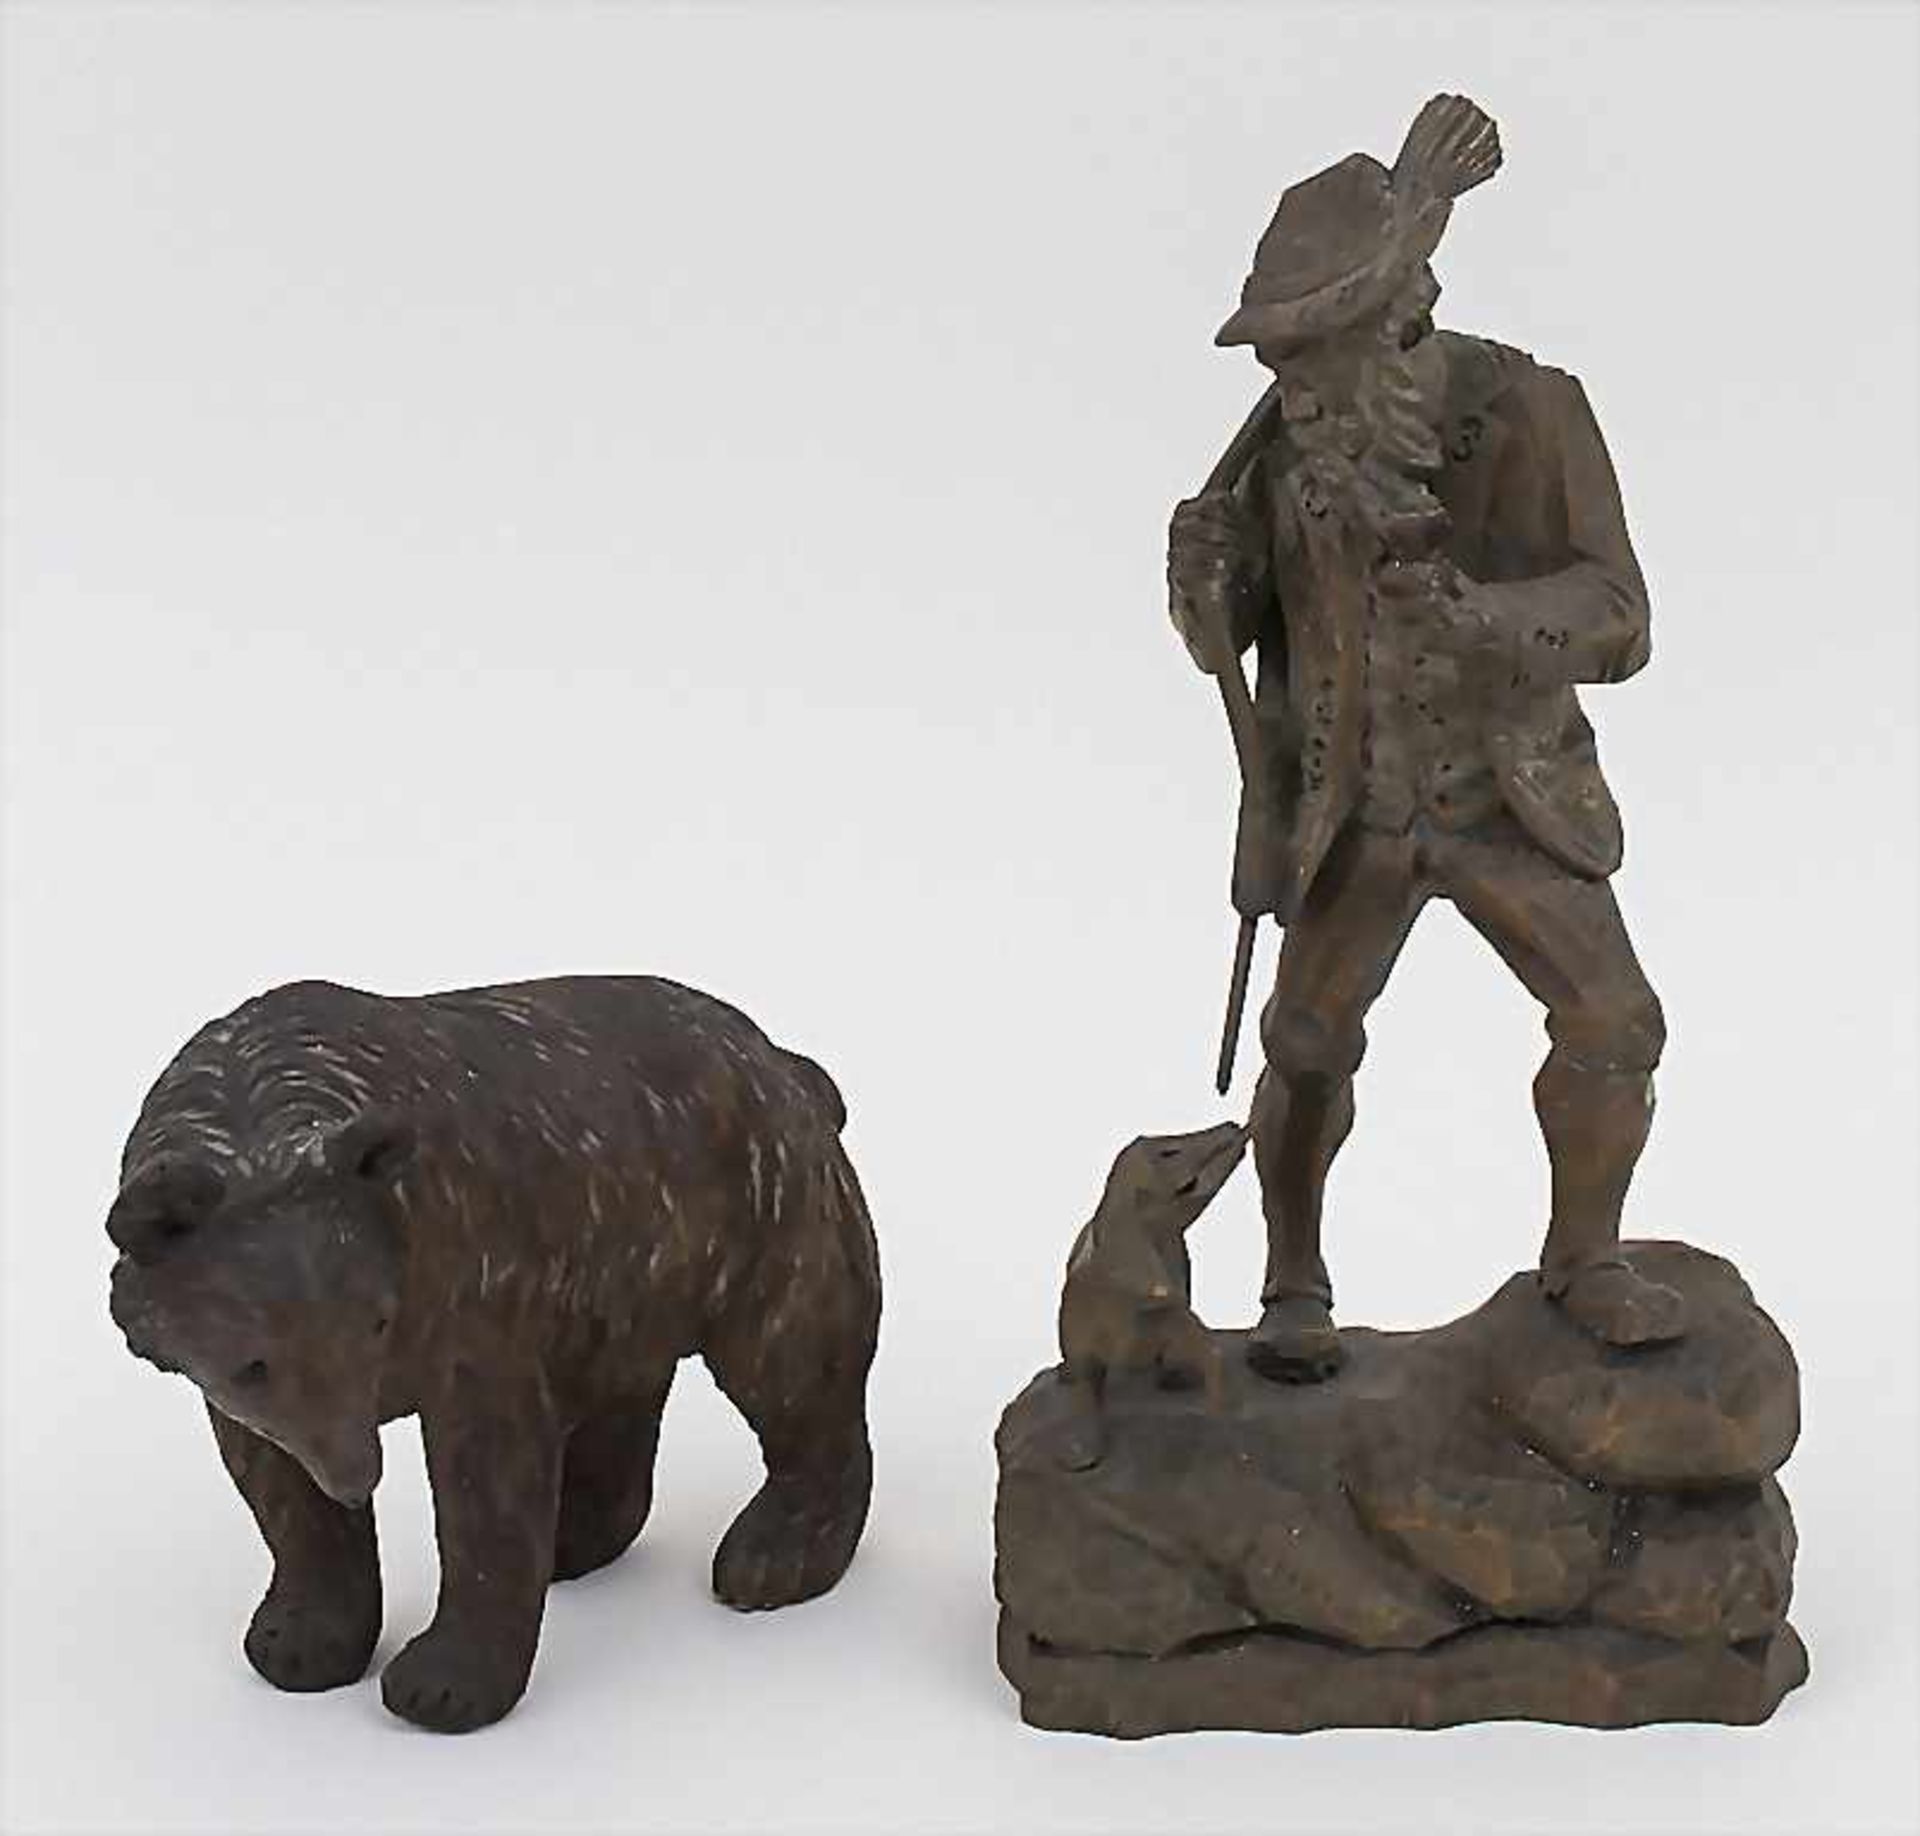 Konvolut Figuren 'Jäger mit Hund' und 'Bär' / A set of figures 'Hunter with dog' and 'bear', um 1900